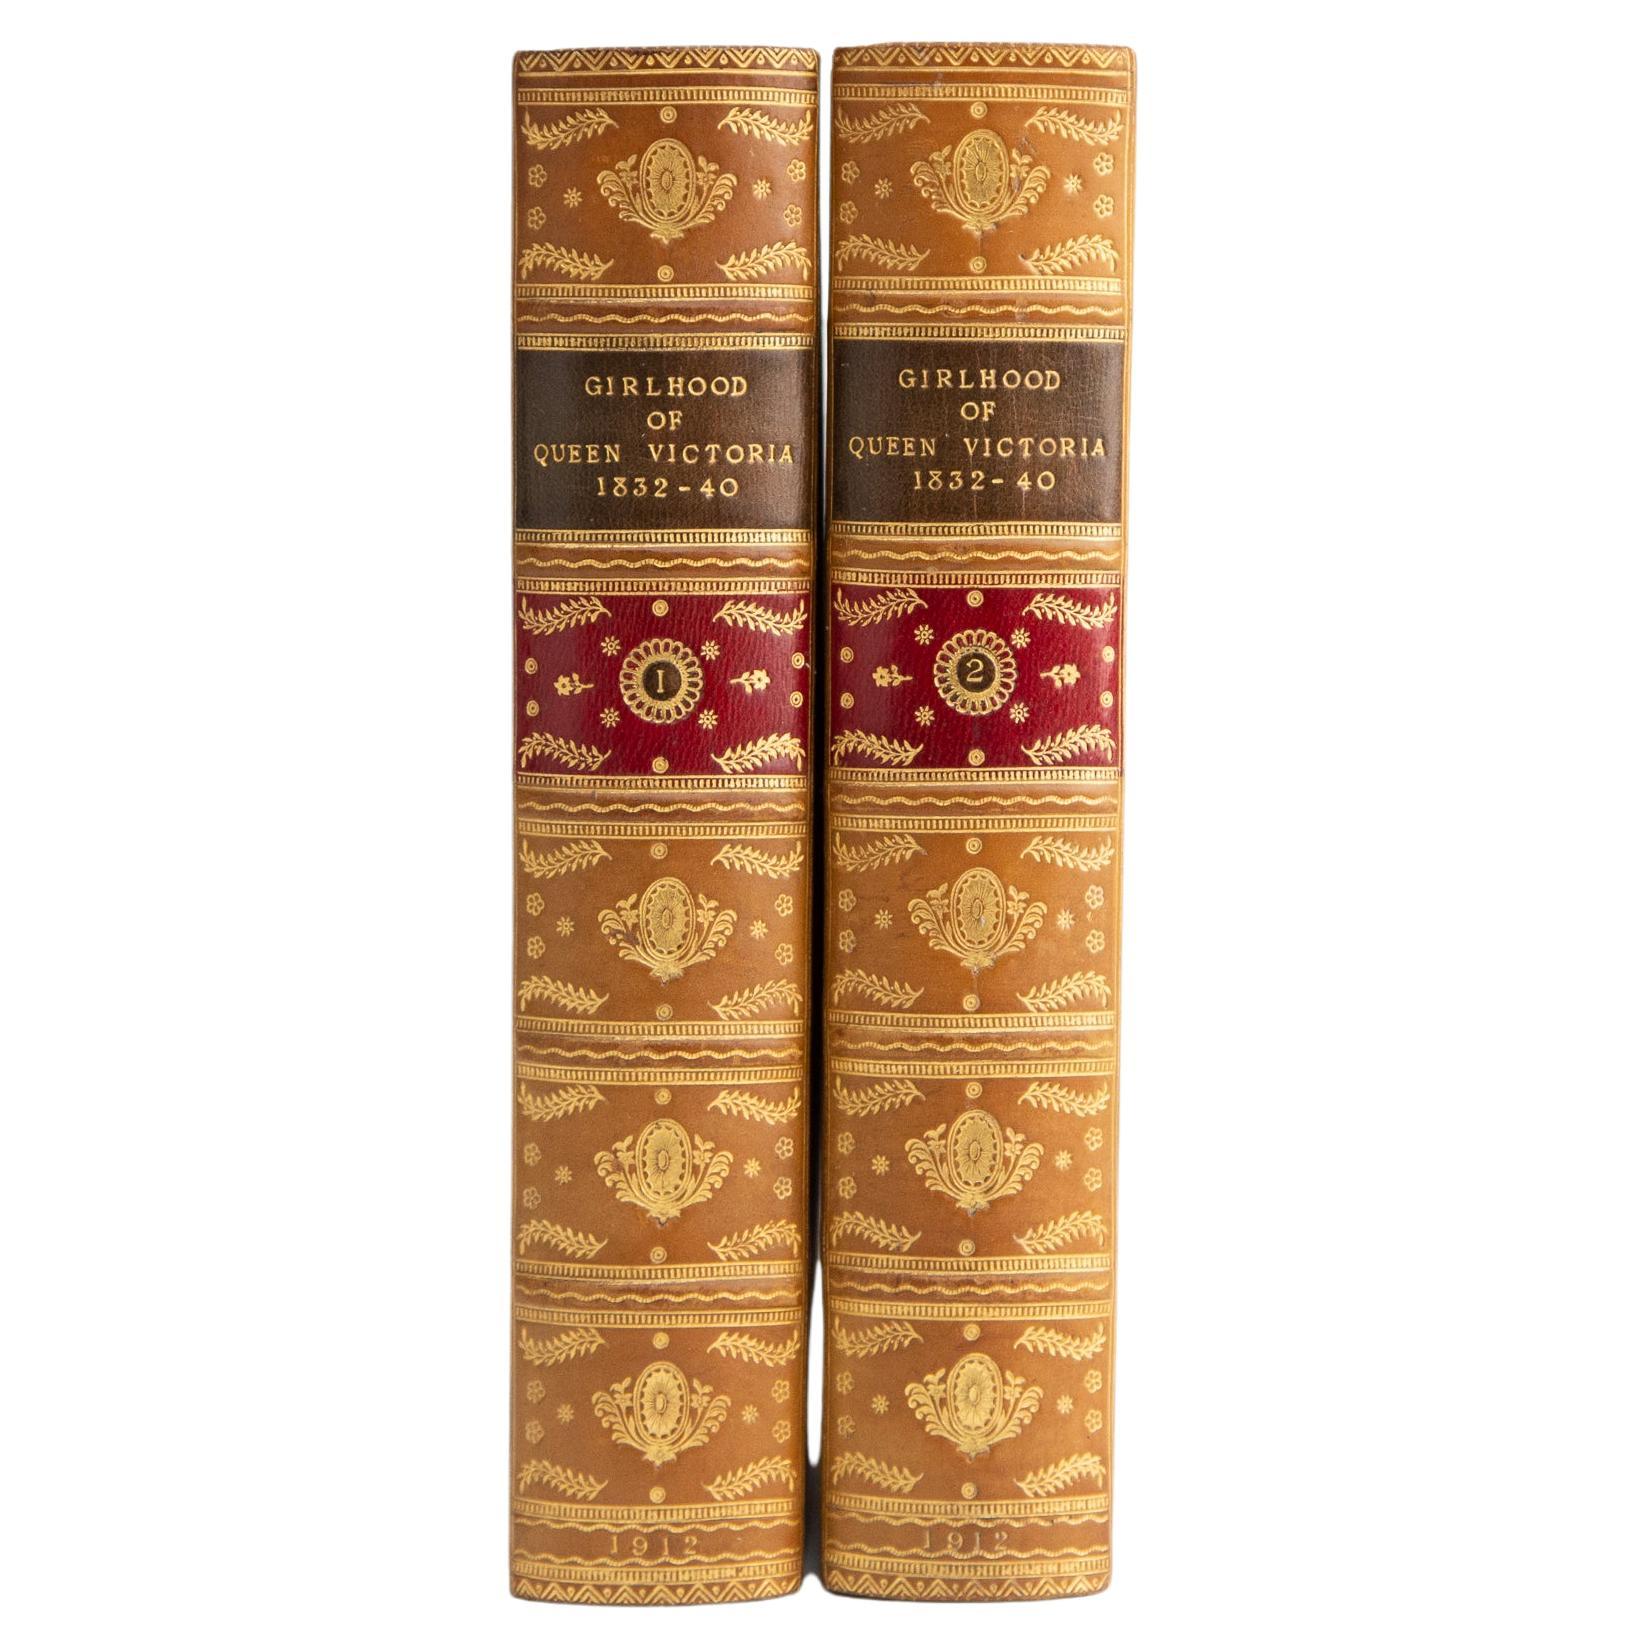 2 Volumes. Viscount Esher, G.C.B., G.C.V.O., The Girlhood of Queen Victoria.